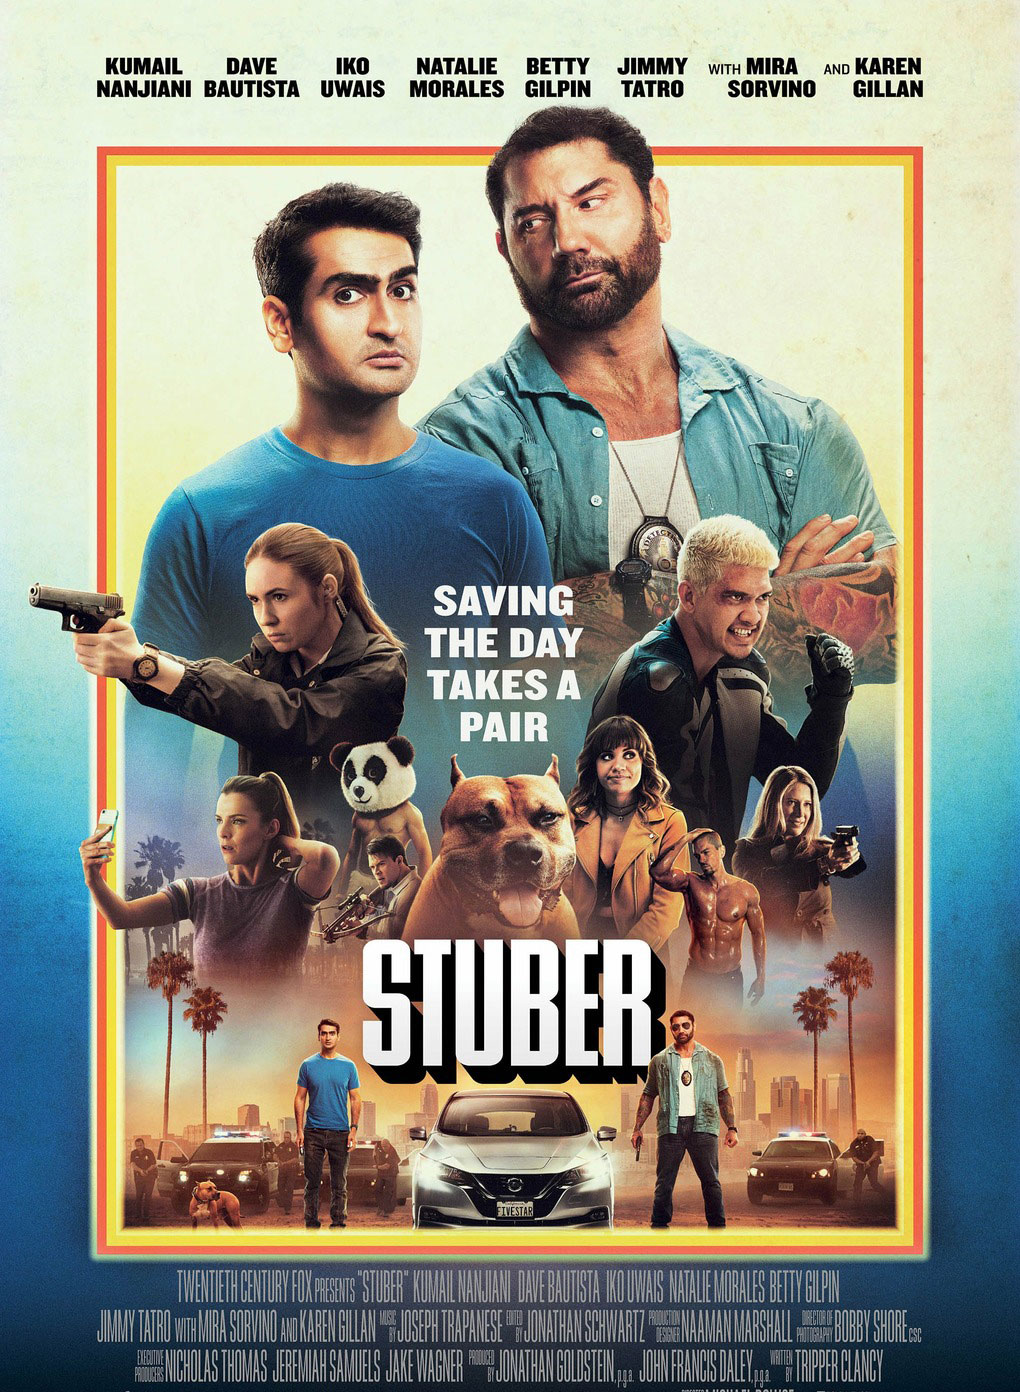 Stuber, starring Kumail Nanjiani and Dave Bautista